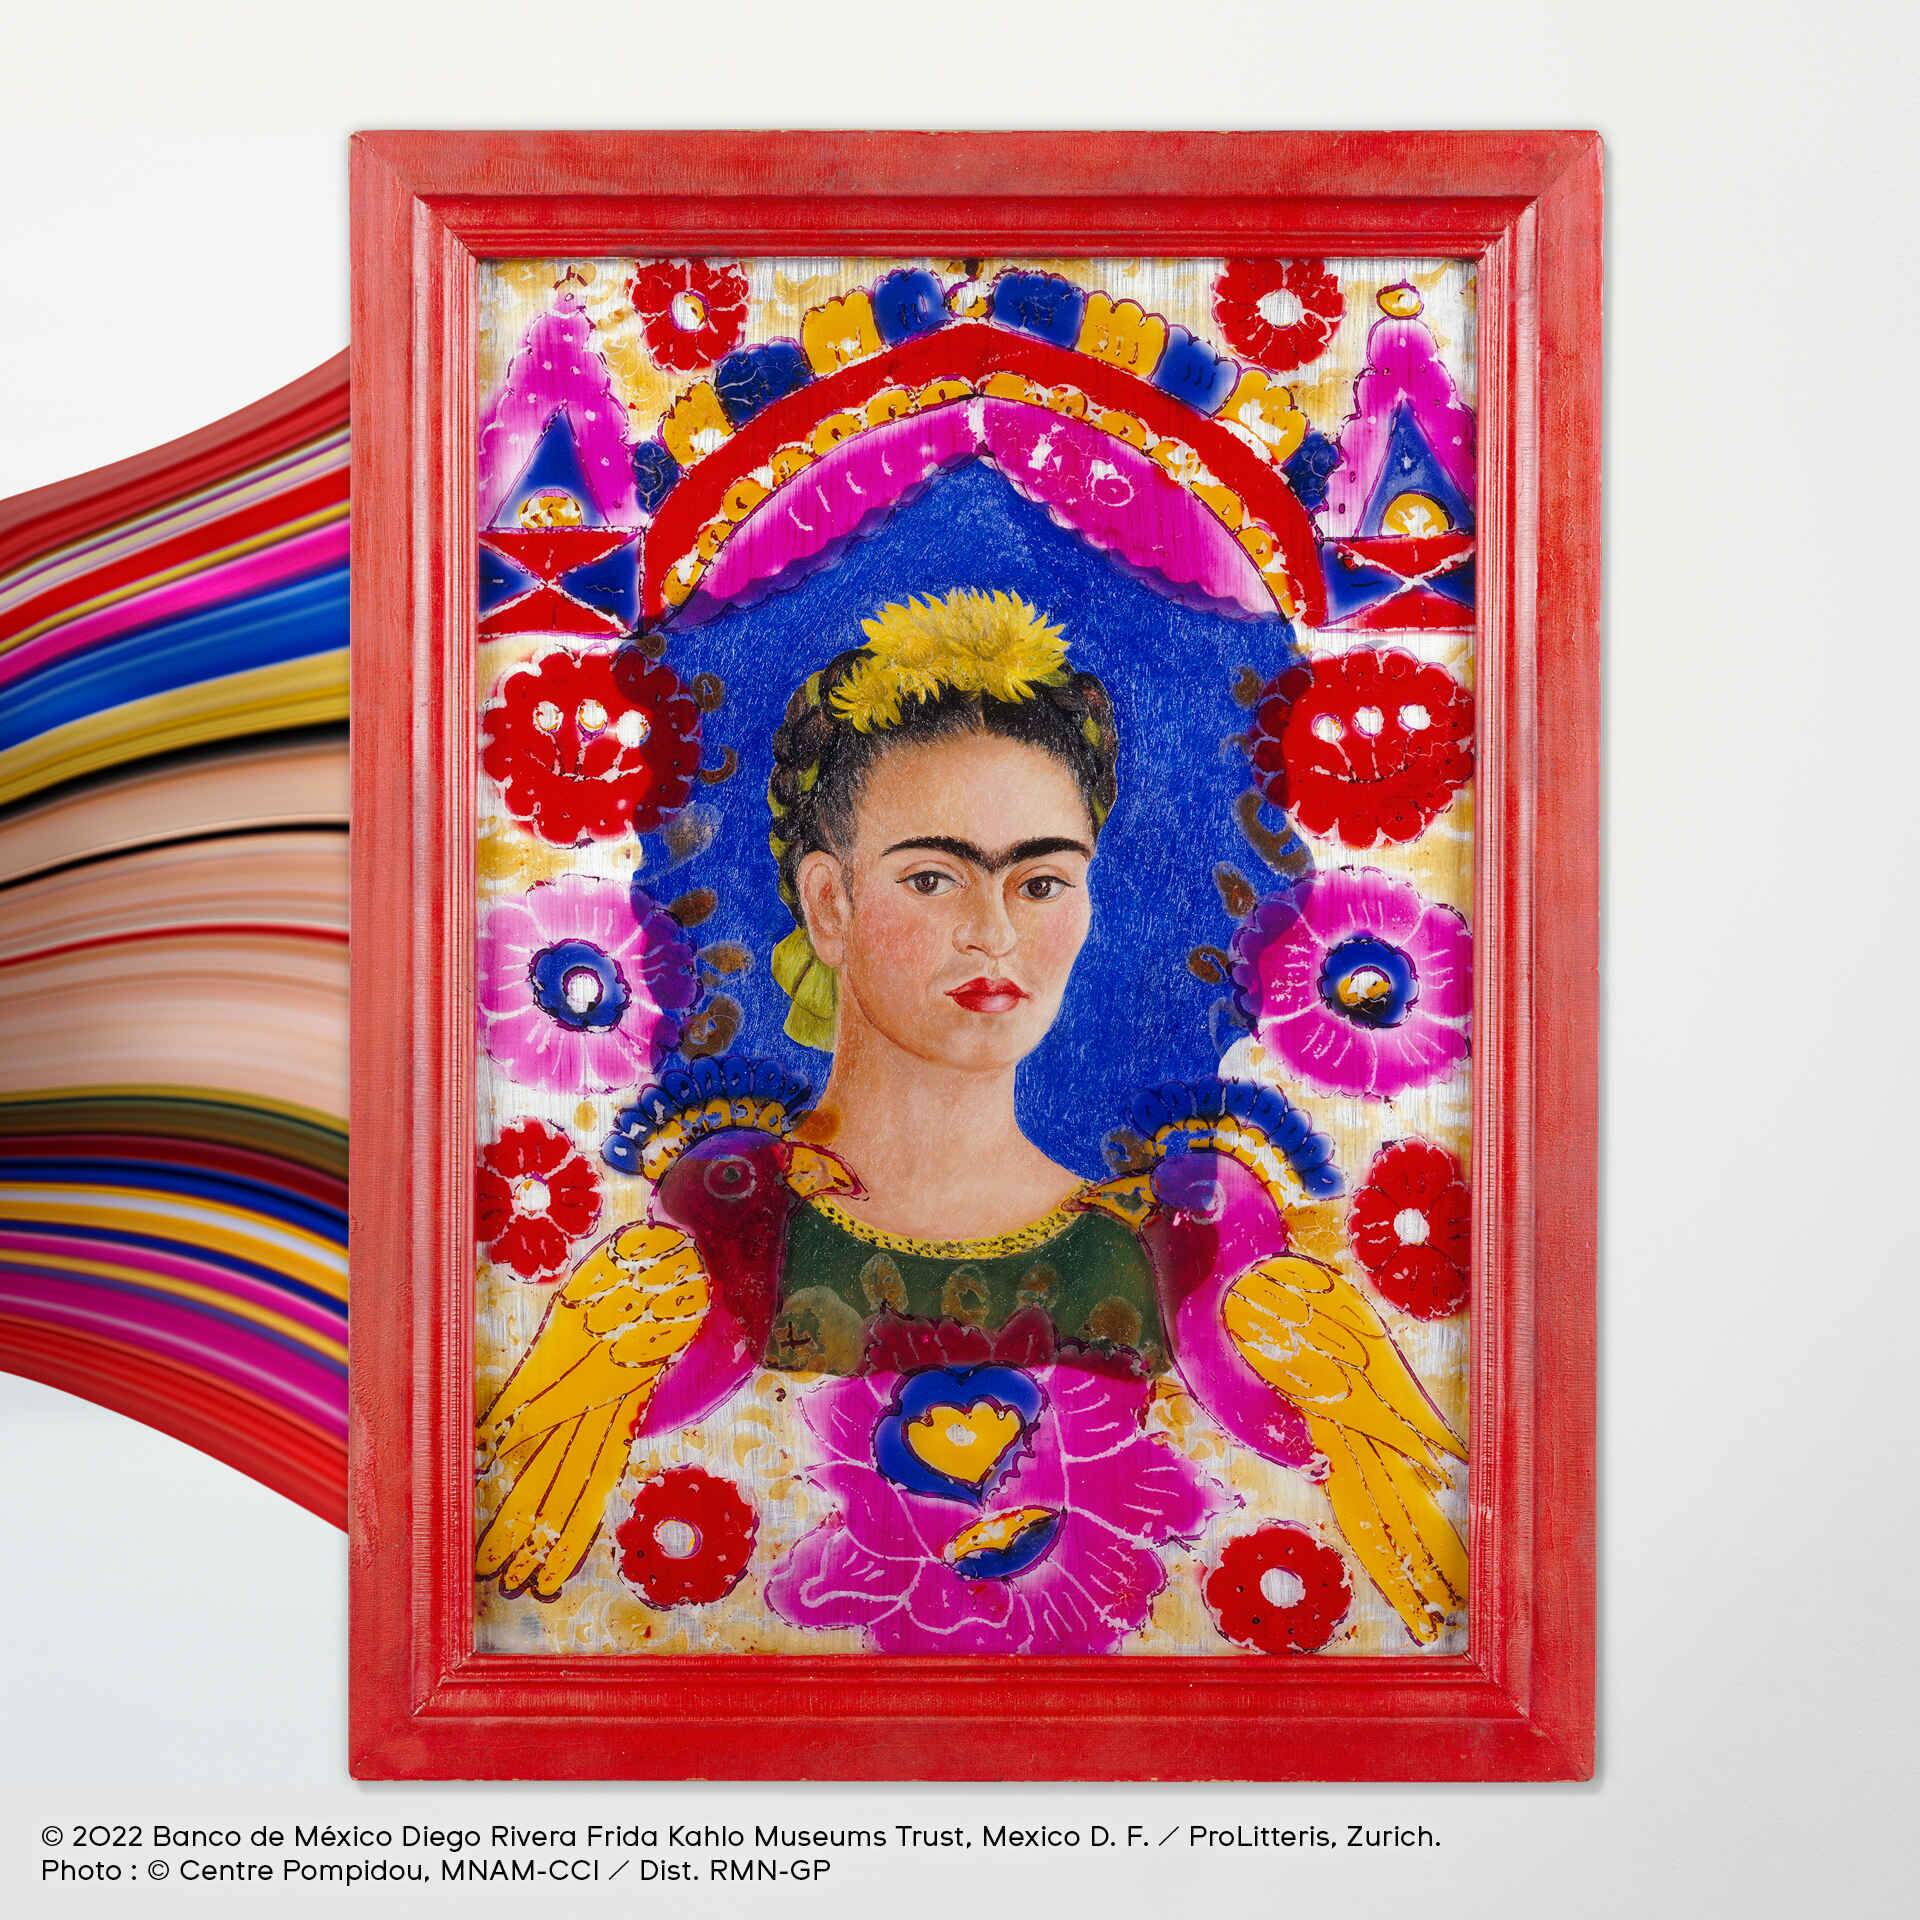 The Frame, by Frida Kahlo